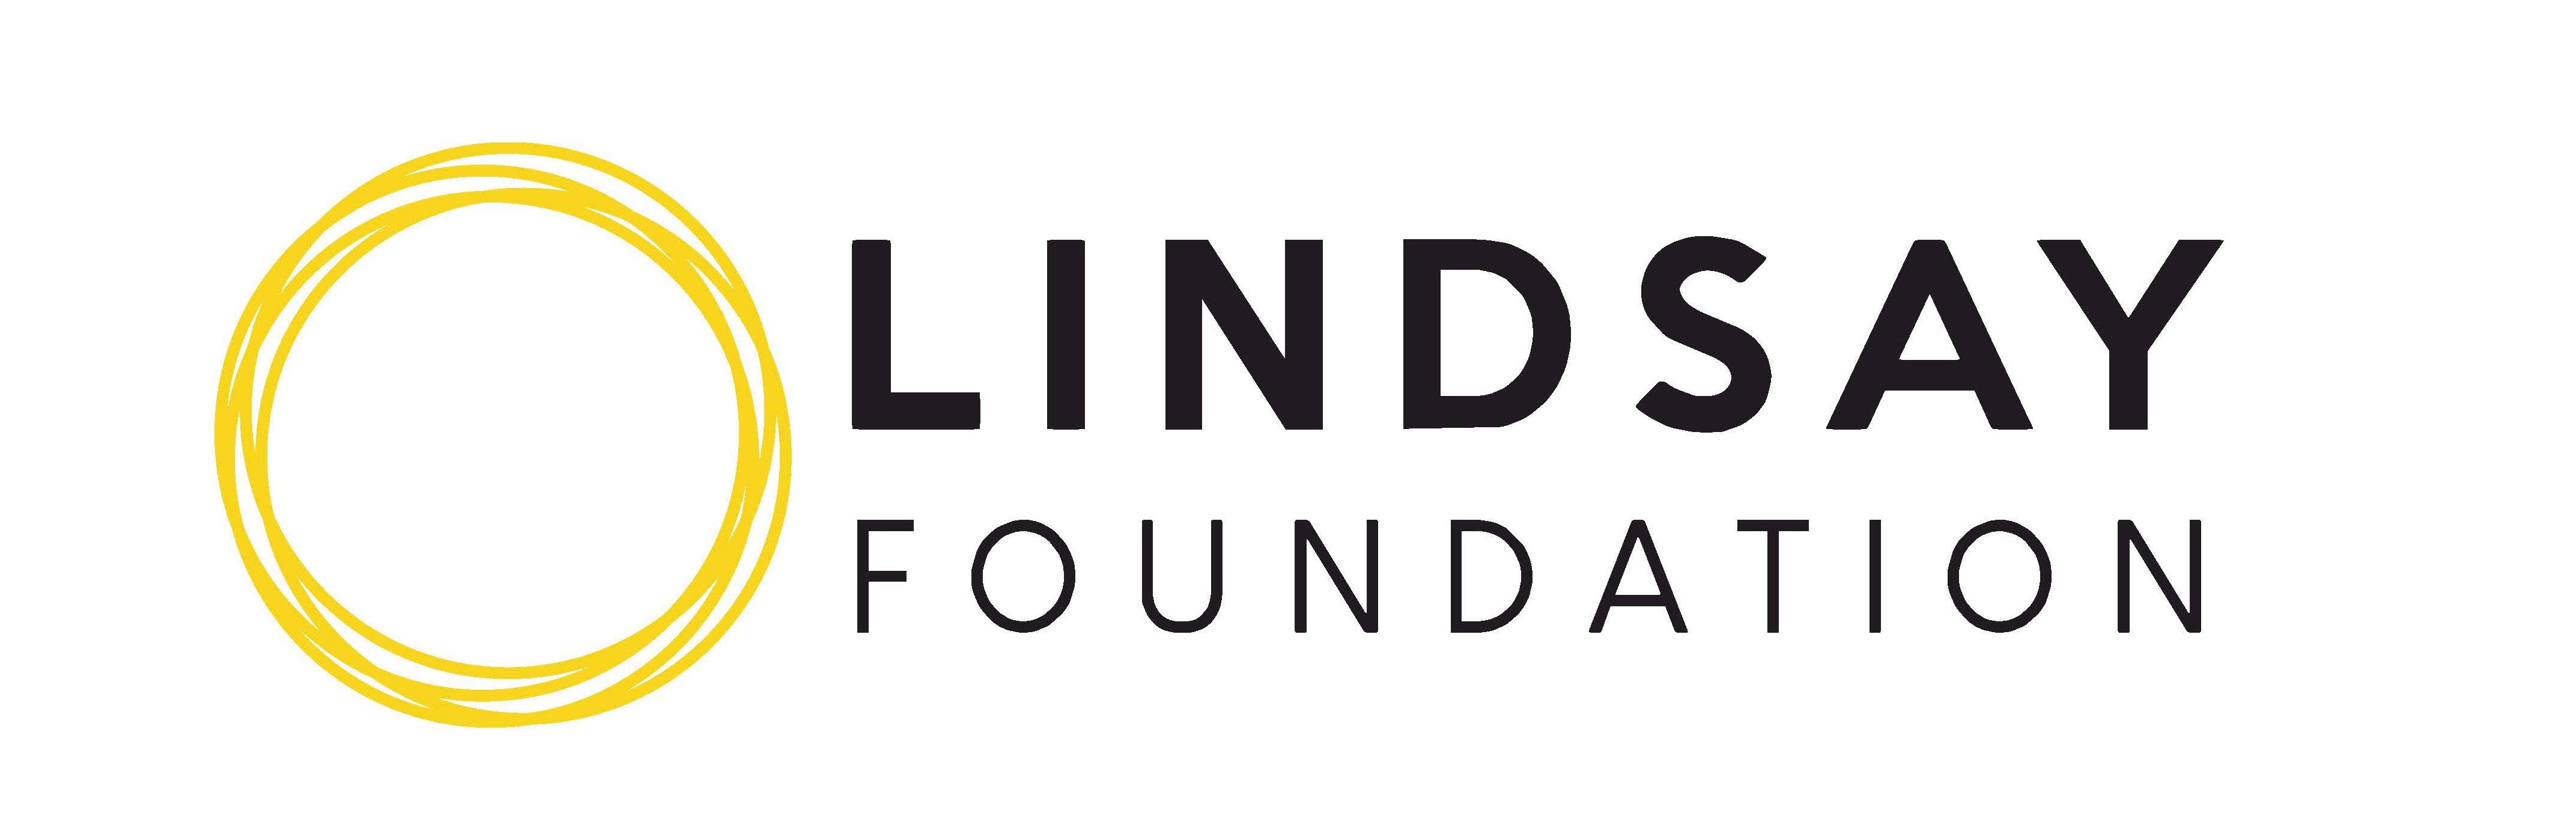 Lindsay Foundation